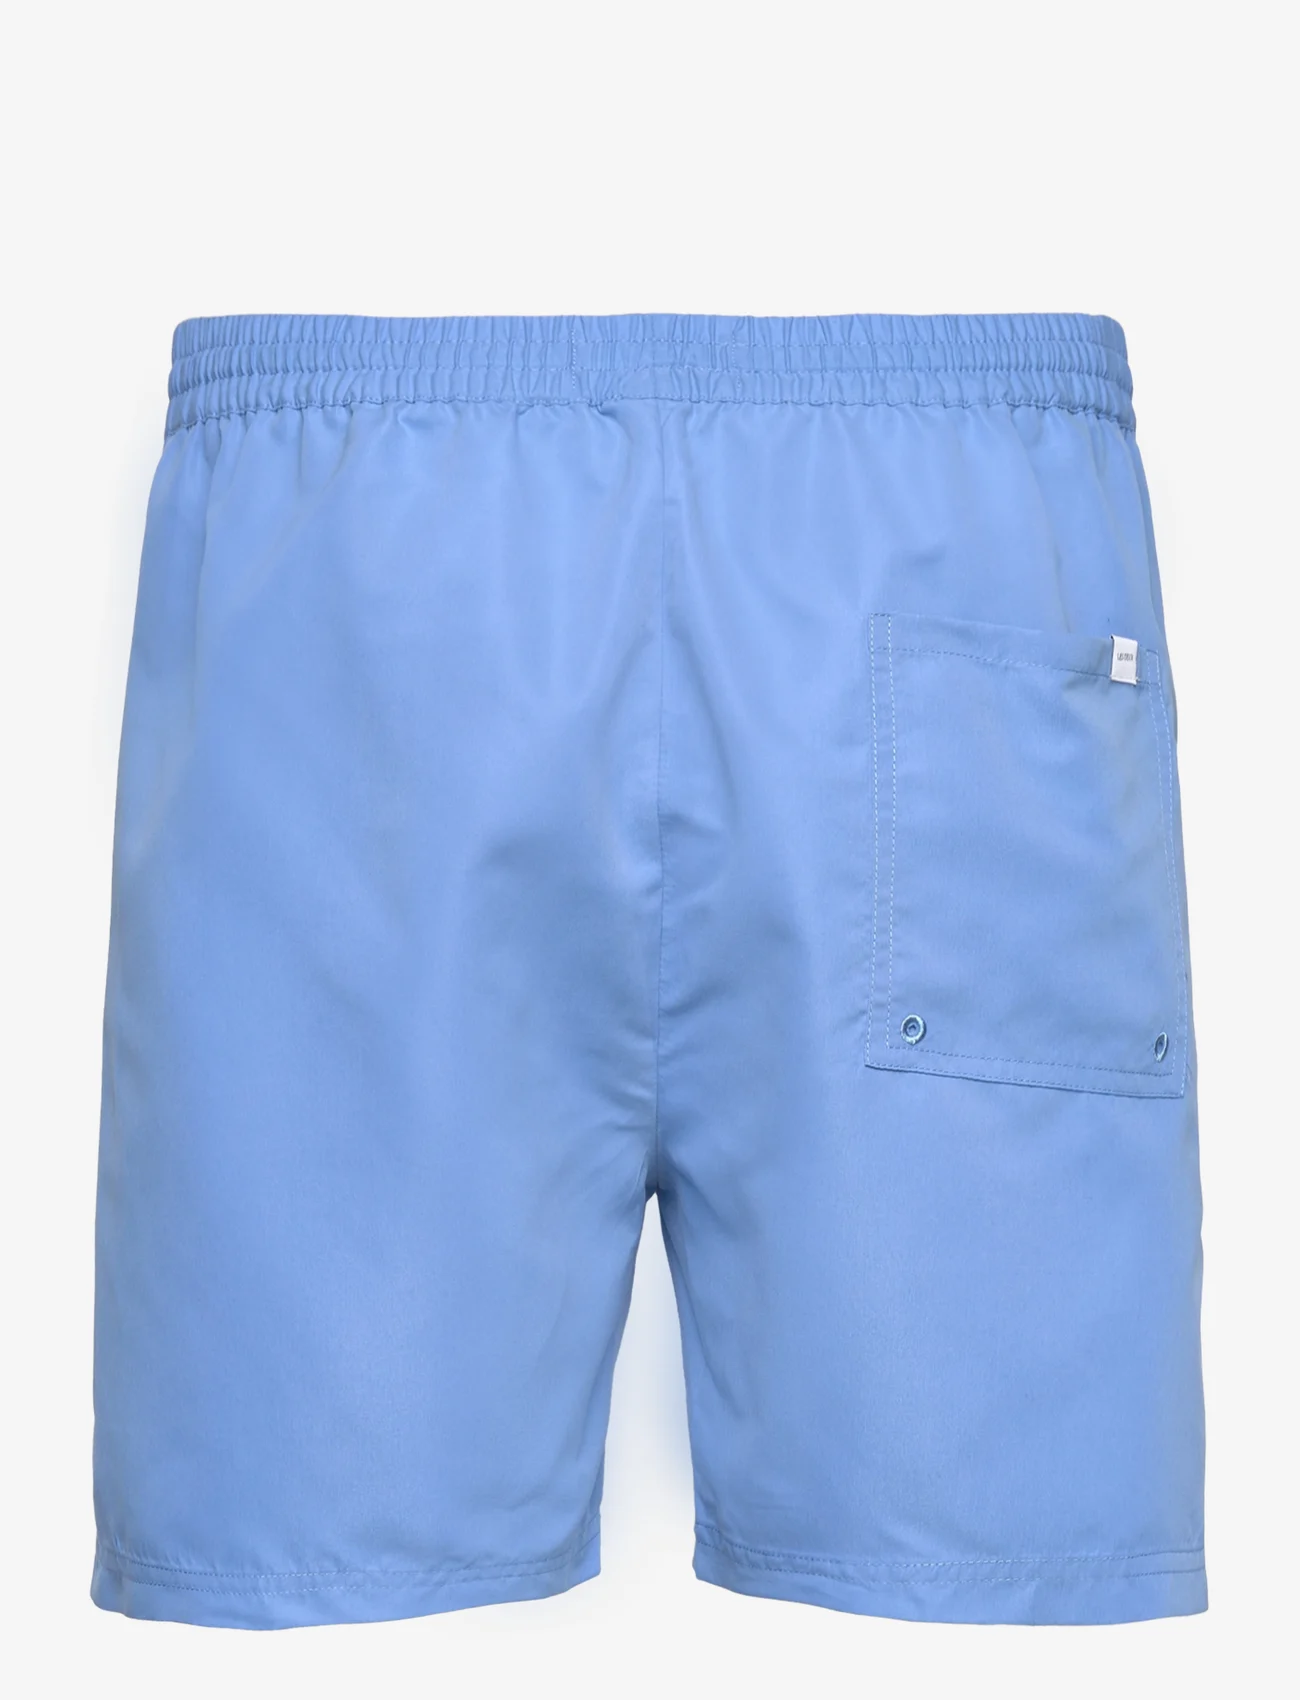 Les Deux - Les Deux Logo Swim Shorts - uimashortsit - washed denim blue/dark navy - 1